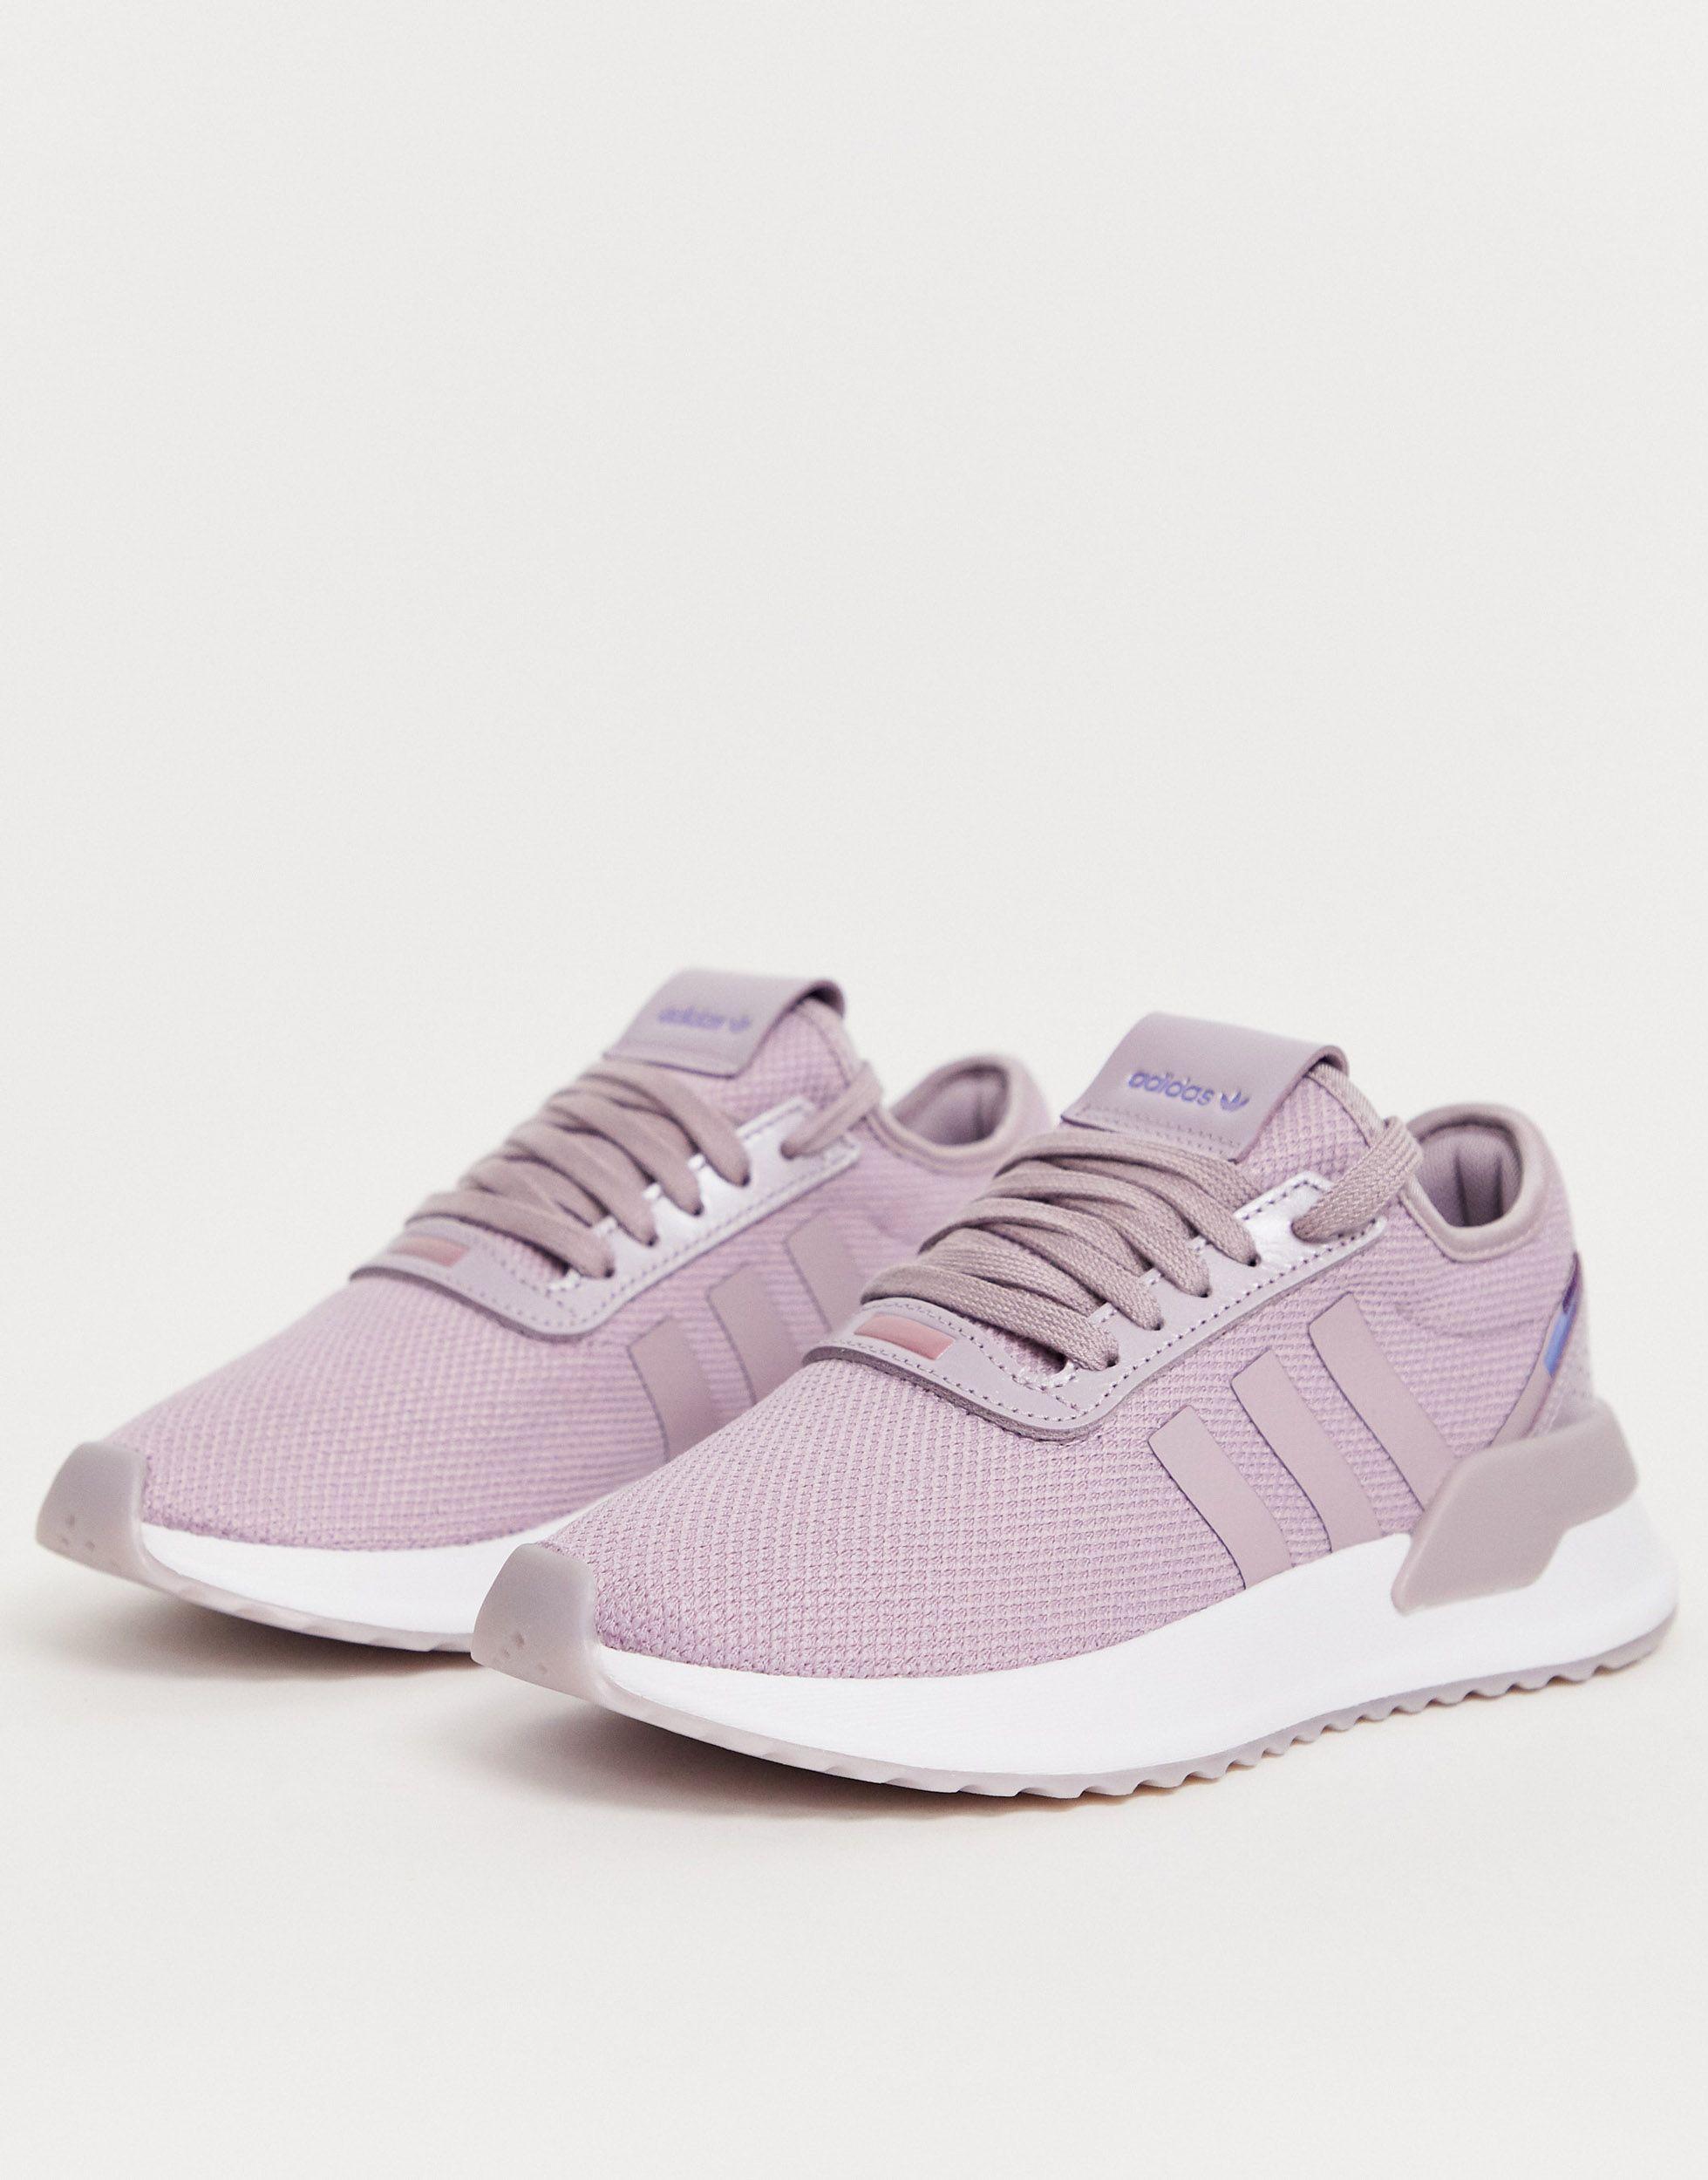 adidas Originals U_path X W Running Shoe in Purple - Lyst